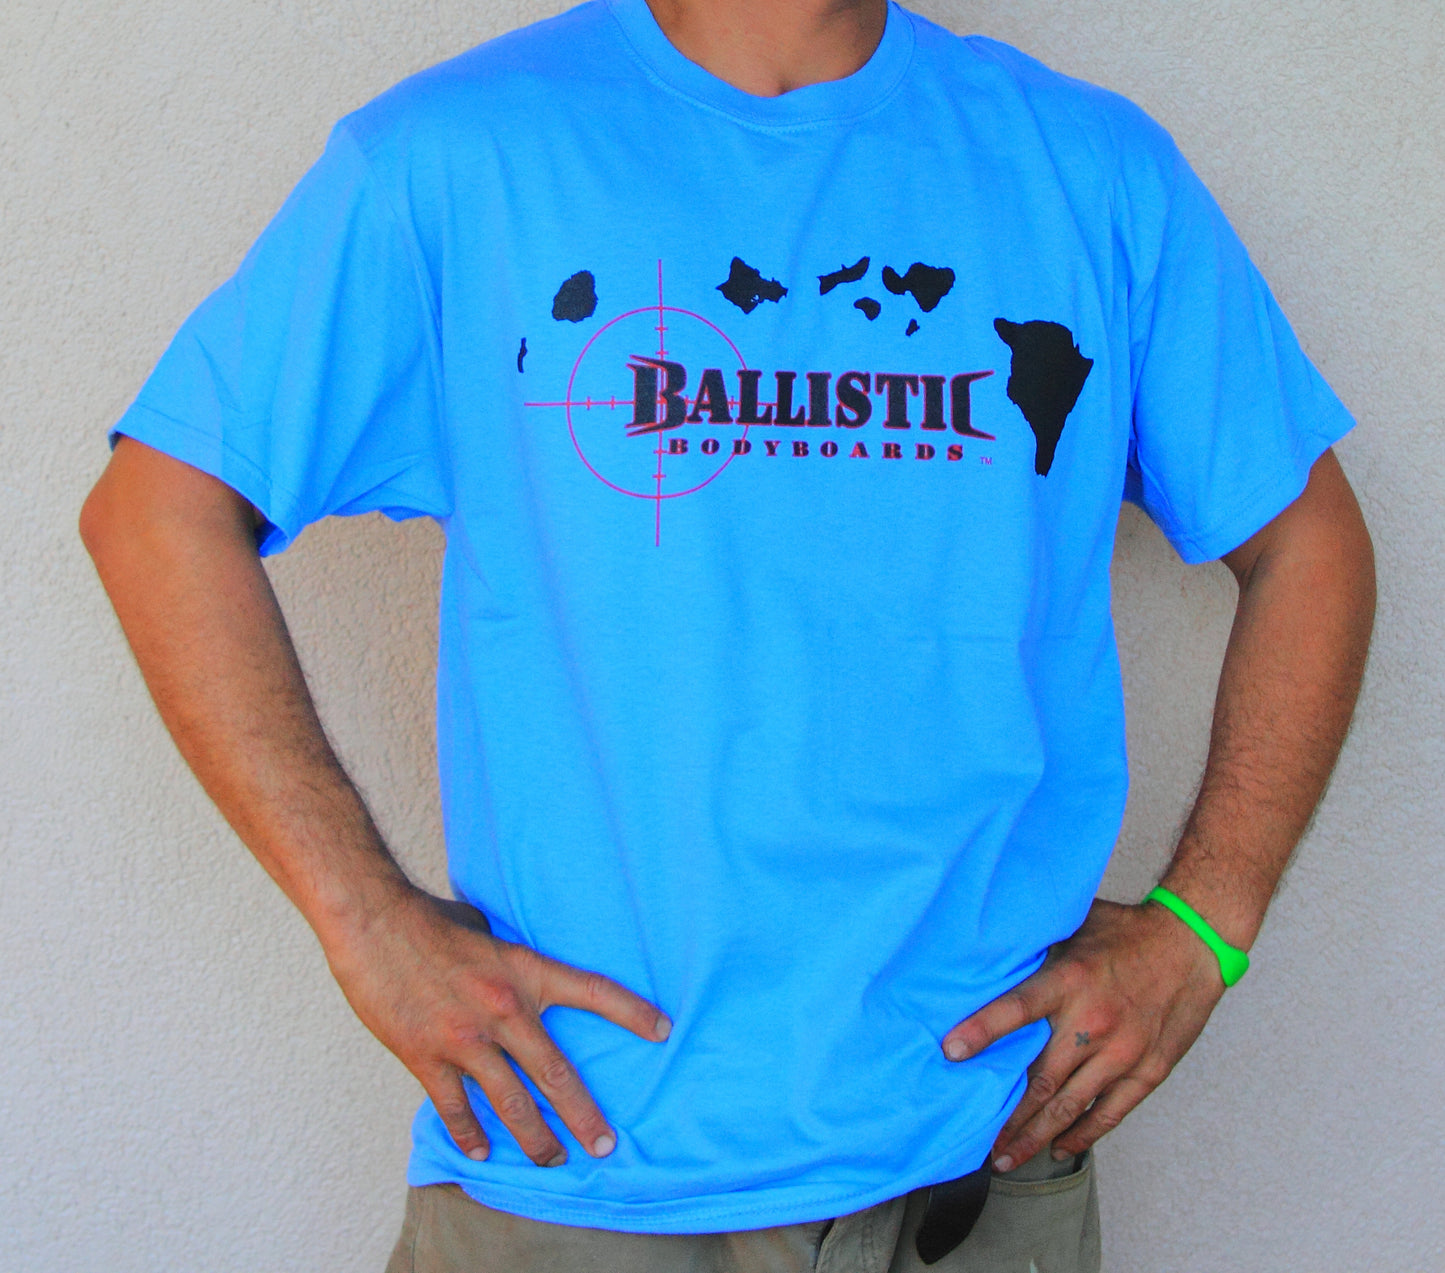 Ballistic Shirts